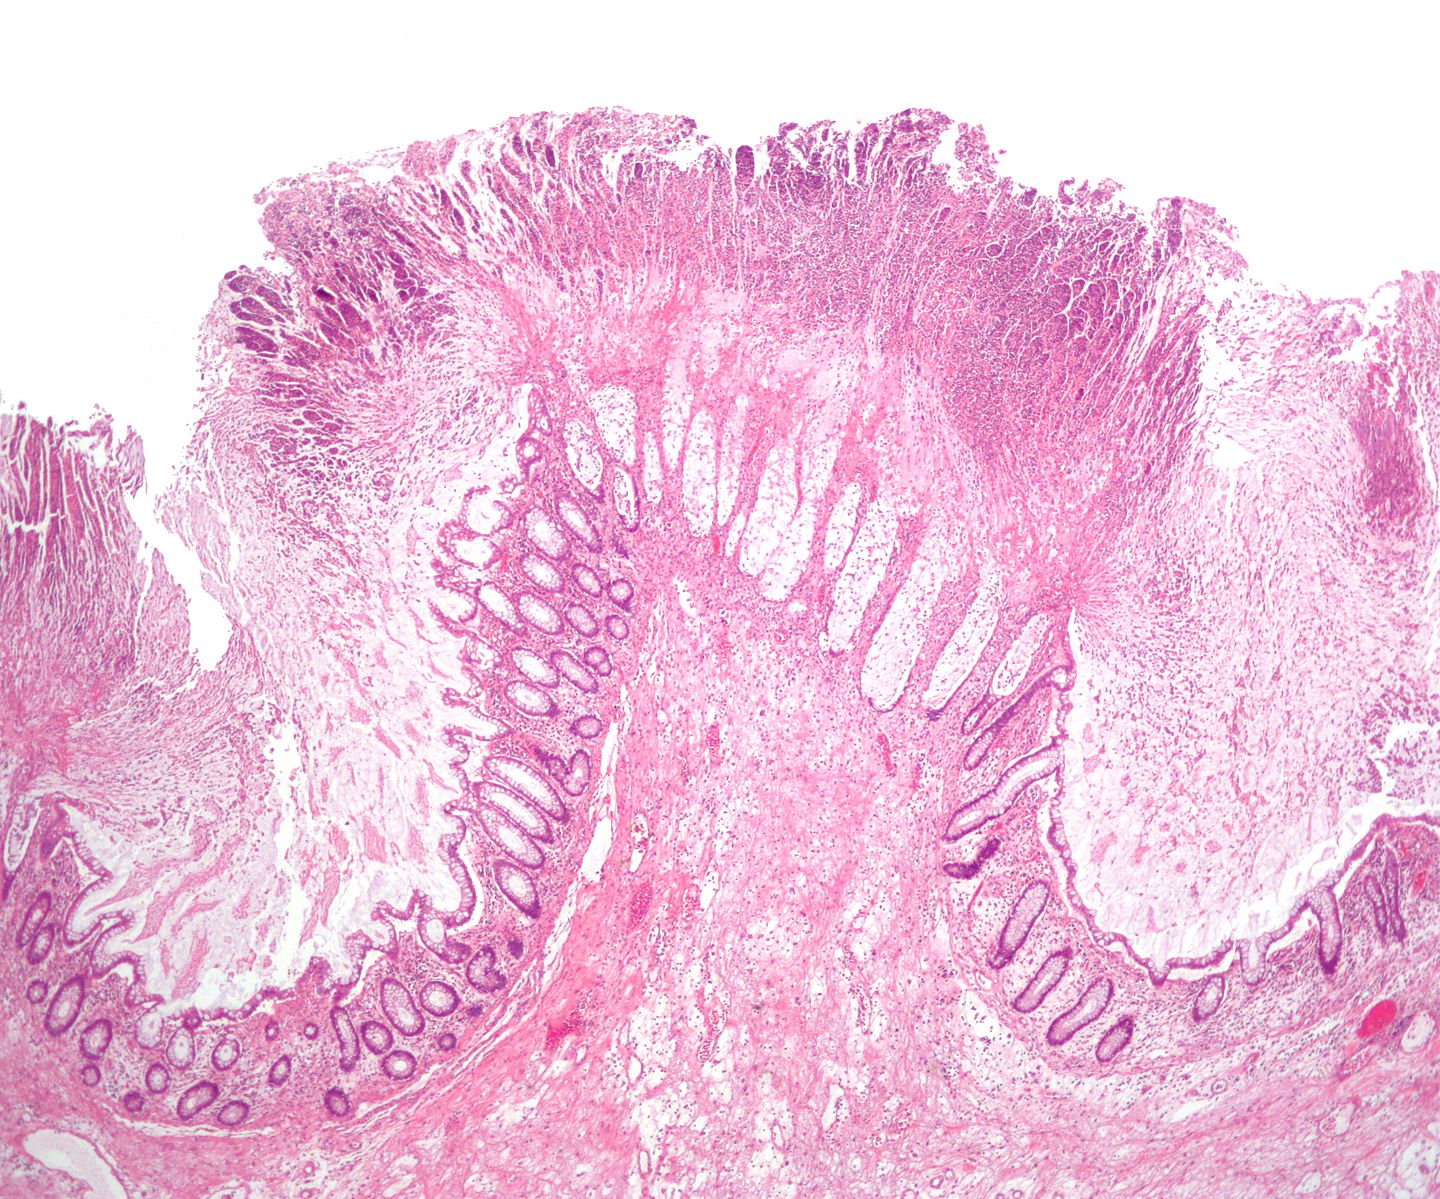 Pseudomembranous colitis. H& E staining showing pseudomembranes in Clostridium colitis [49]